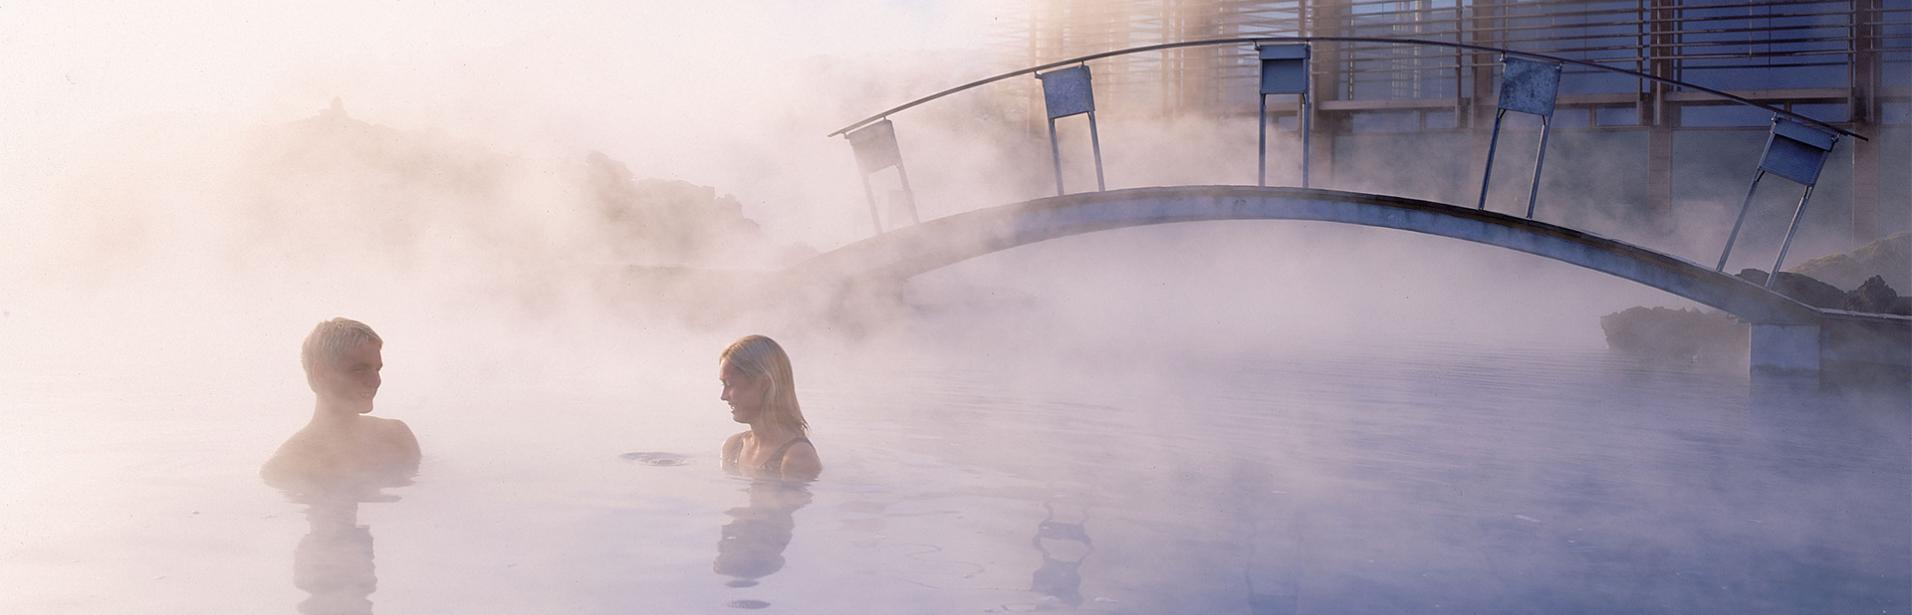 Iceland spa break at Blue Lagoon spa: couple bathing at spa Blue Lagoon, south of Iceland.